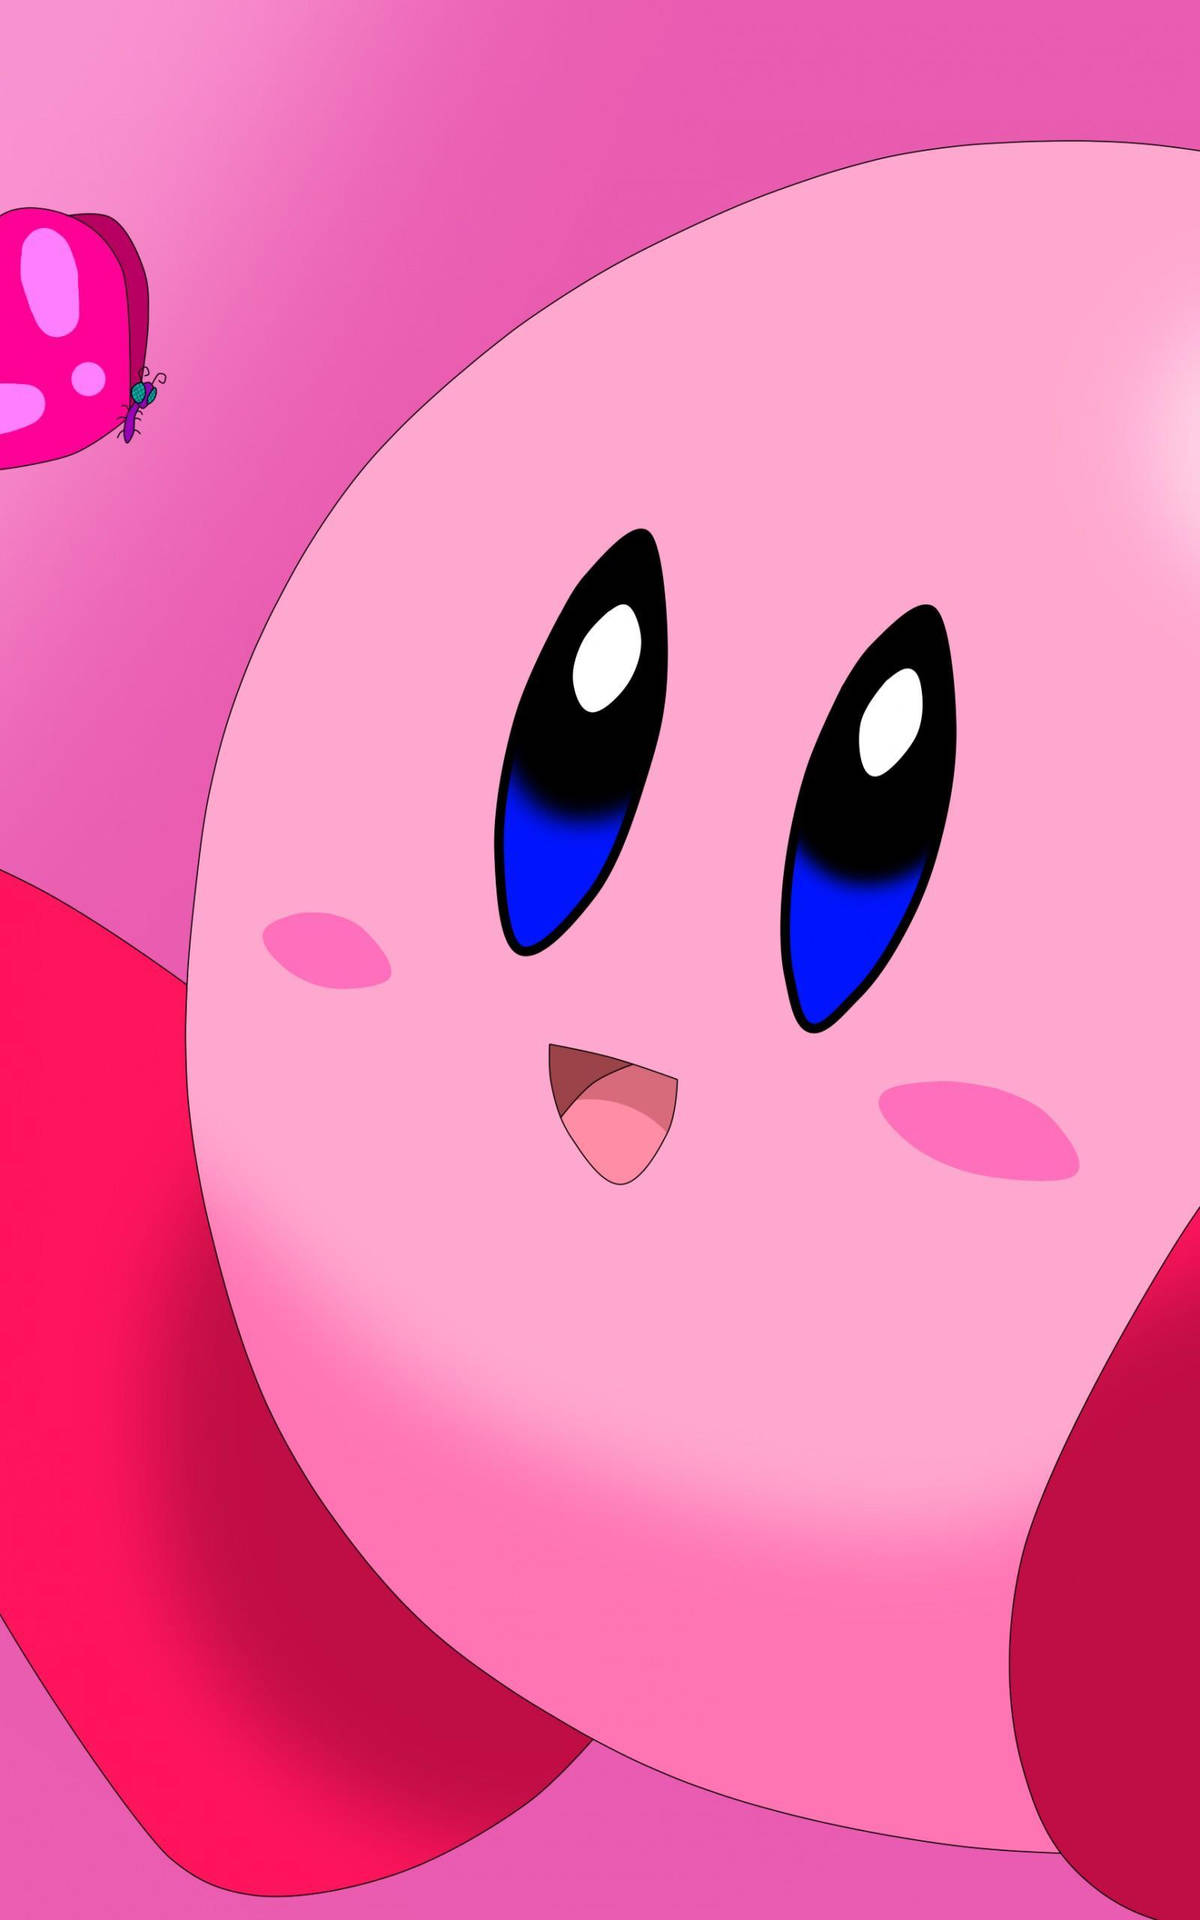 Wonderful wallpaper of adorable pink Kirby